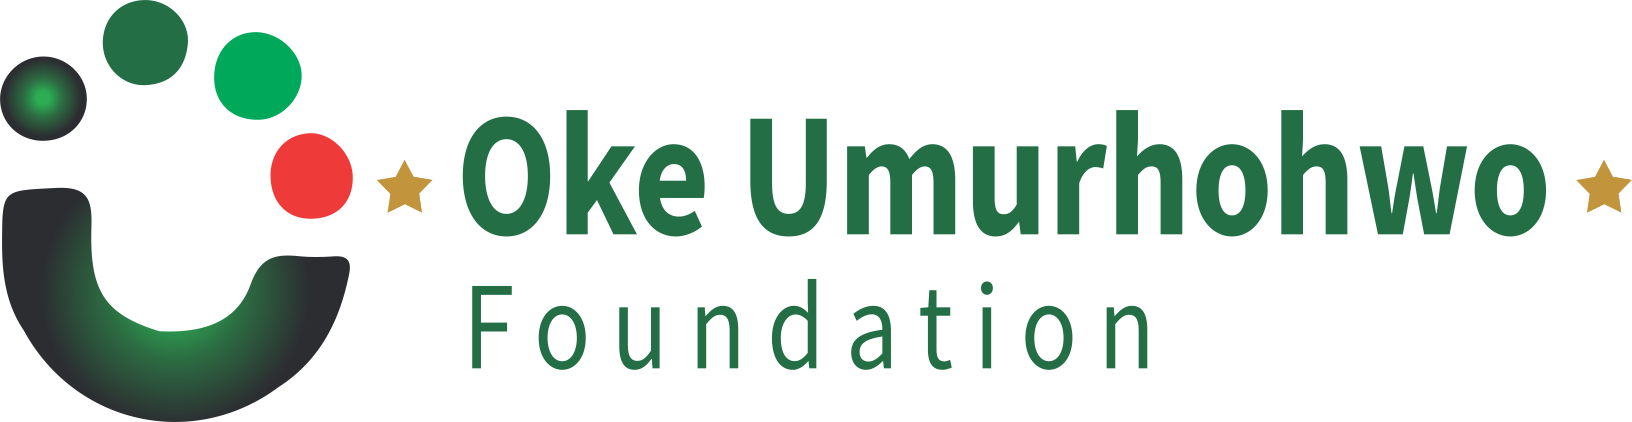 Oke Umurhohwo Foundation: A Foremost NGO in Nigeria